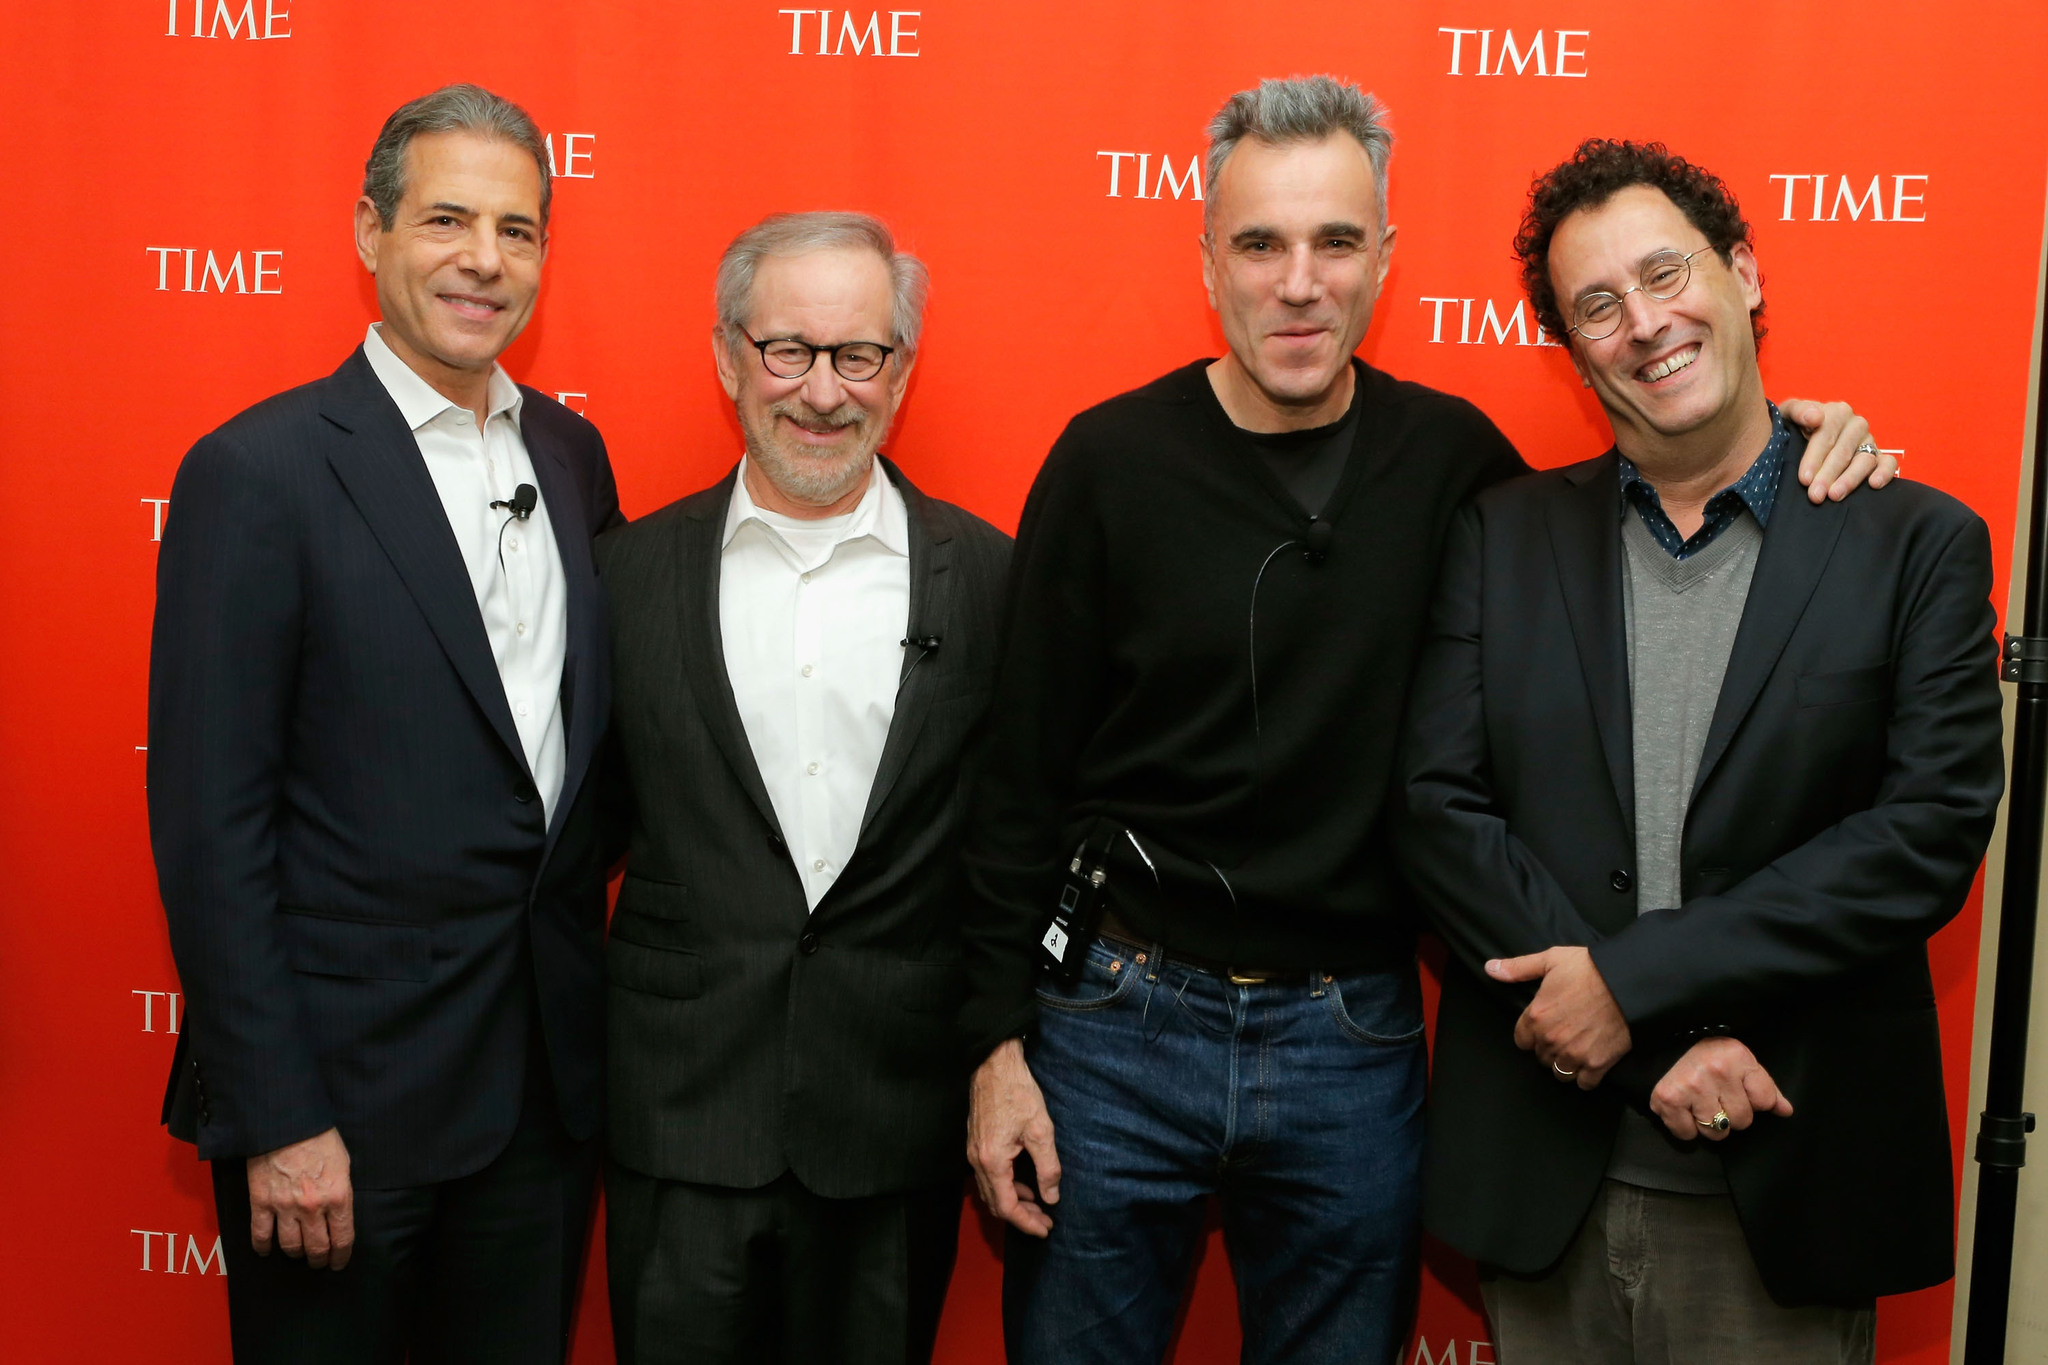 Steven Spielberg, Daniel Day-Lewis, Tony Kushner and Richard Stengel at event of Linkolnas (2012)